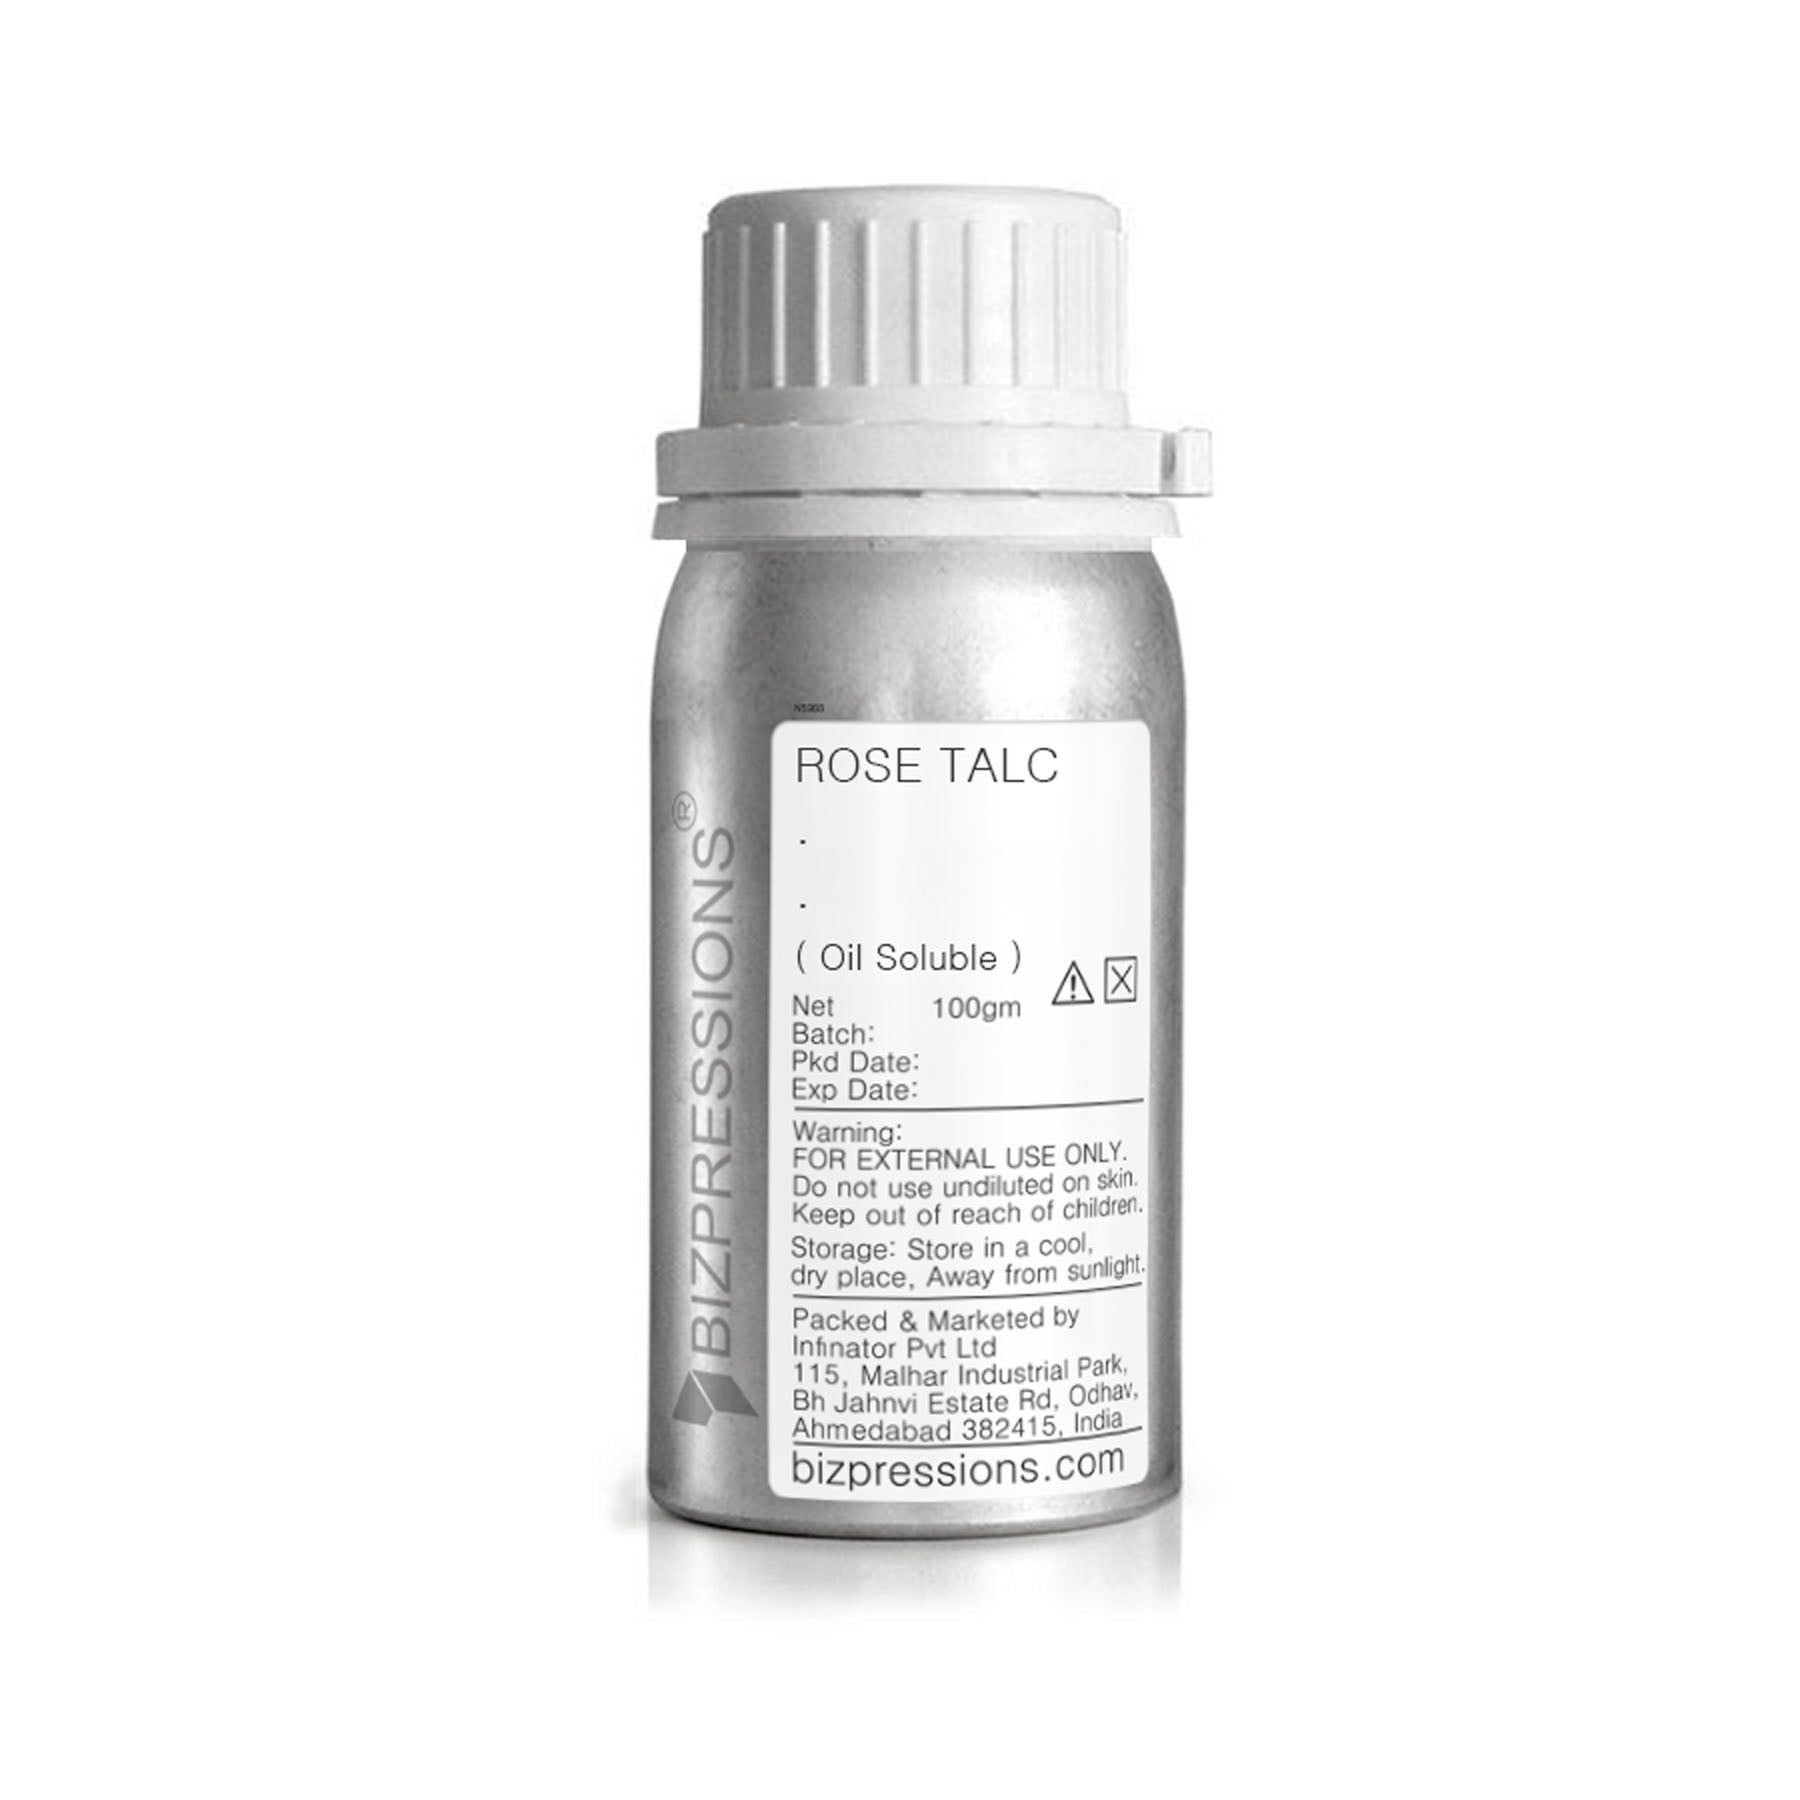 ROSE TALC - Fragrance ( Oil Soluble ) - 100 gm